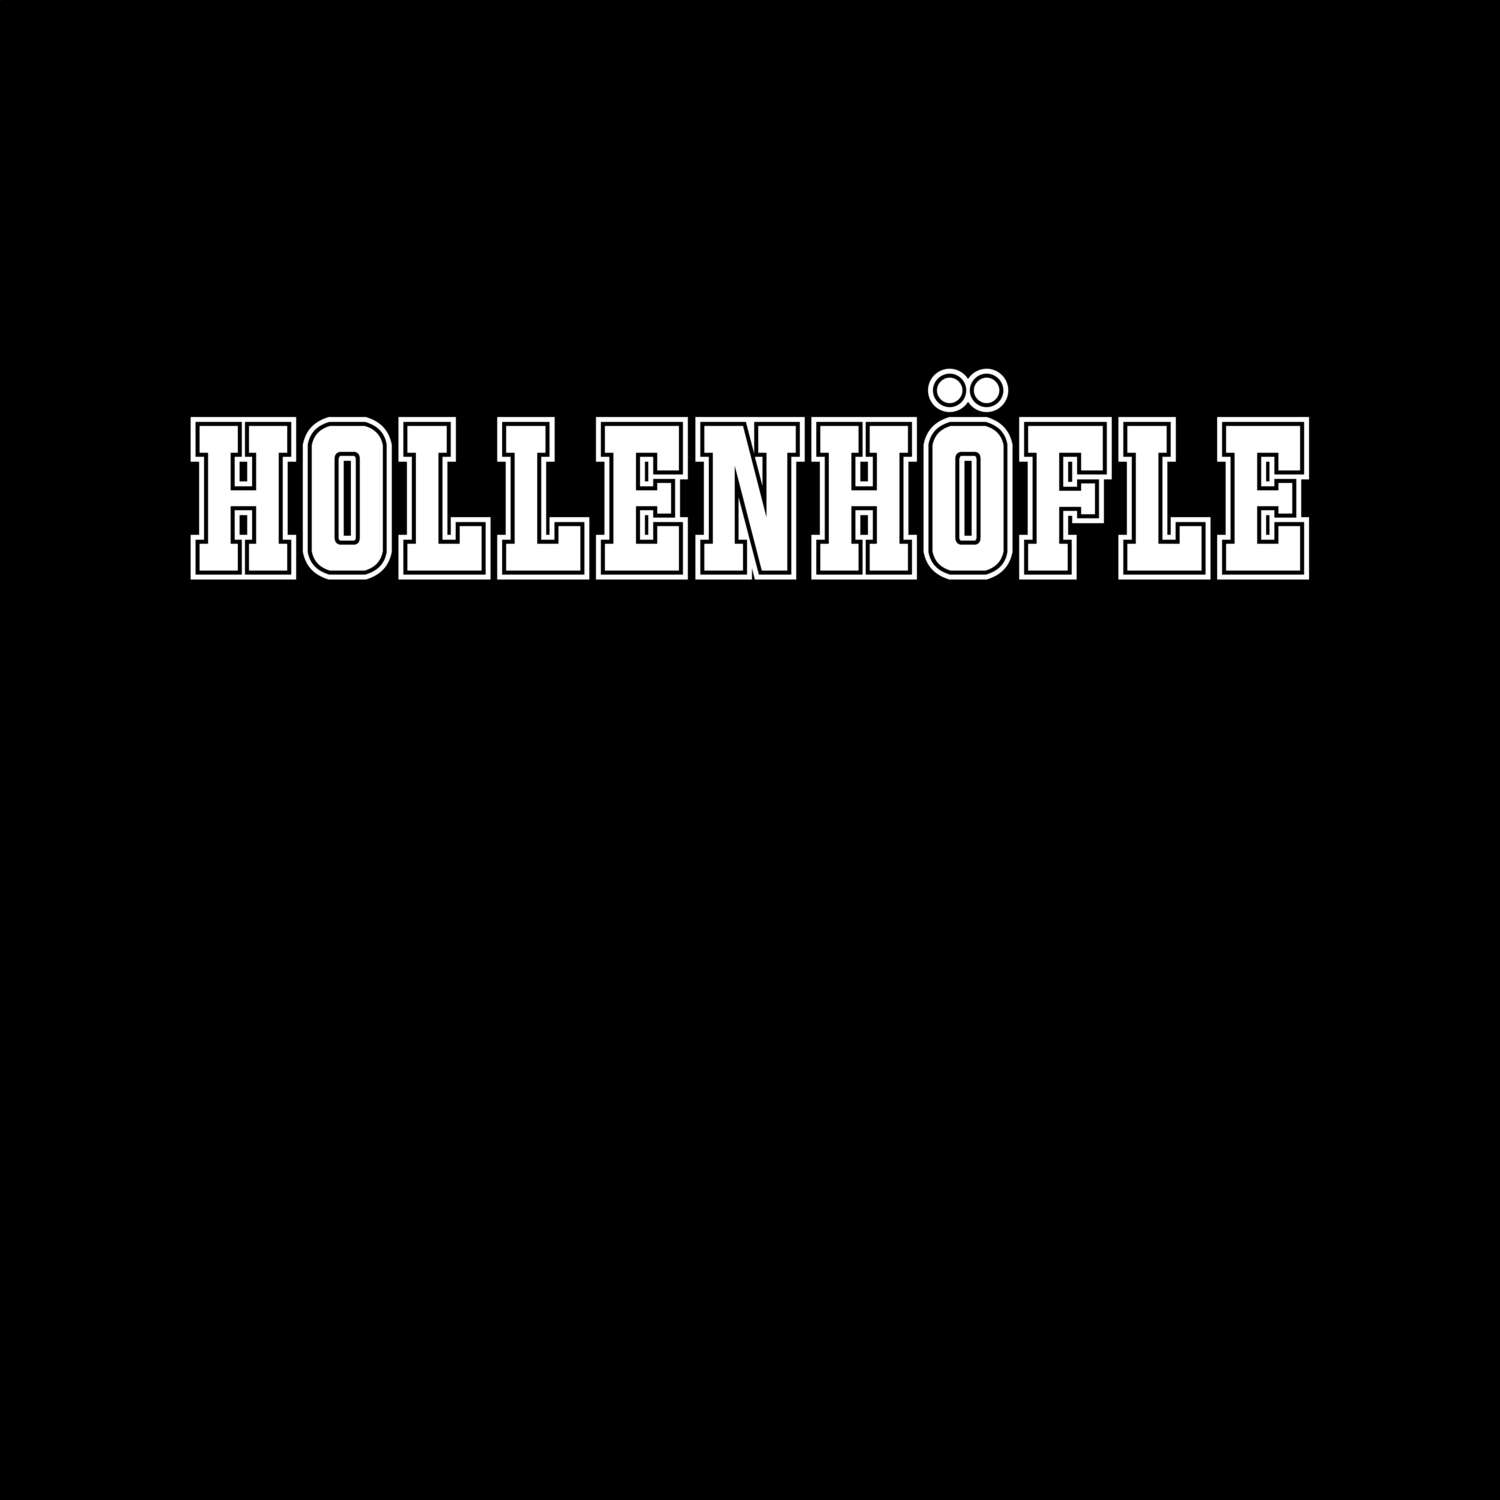 Hollenhöfle T-Shirt »Classic«